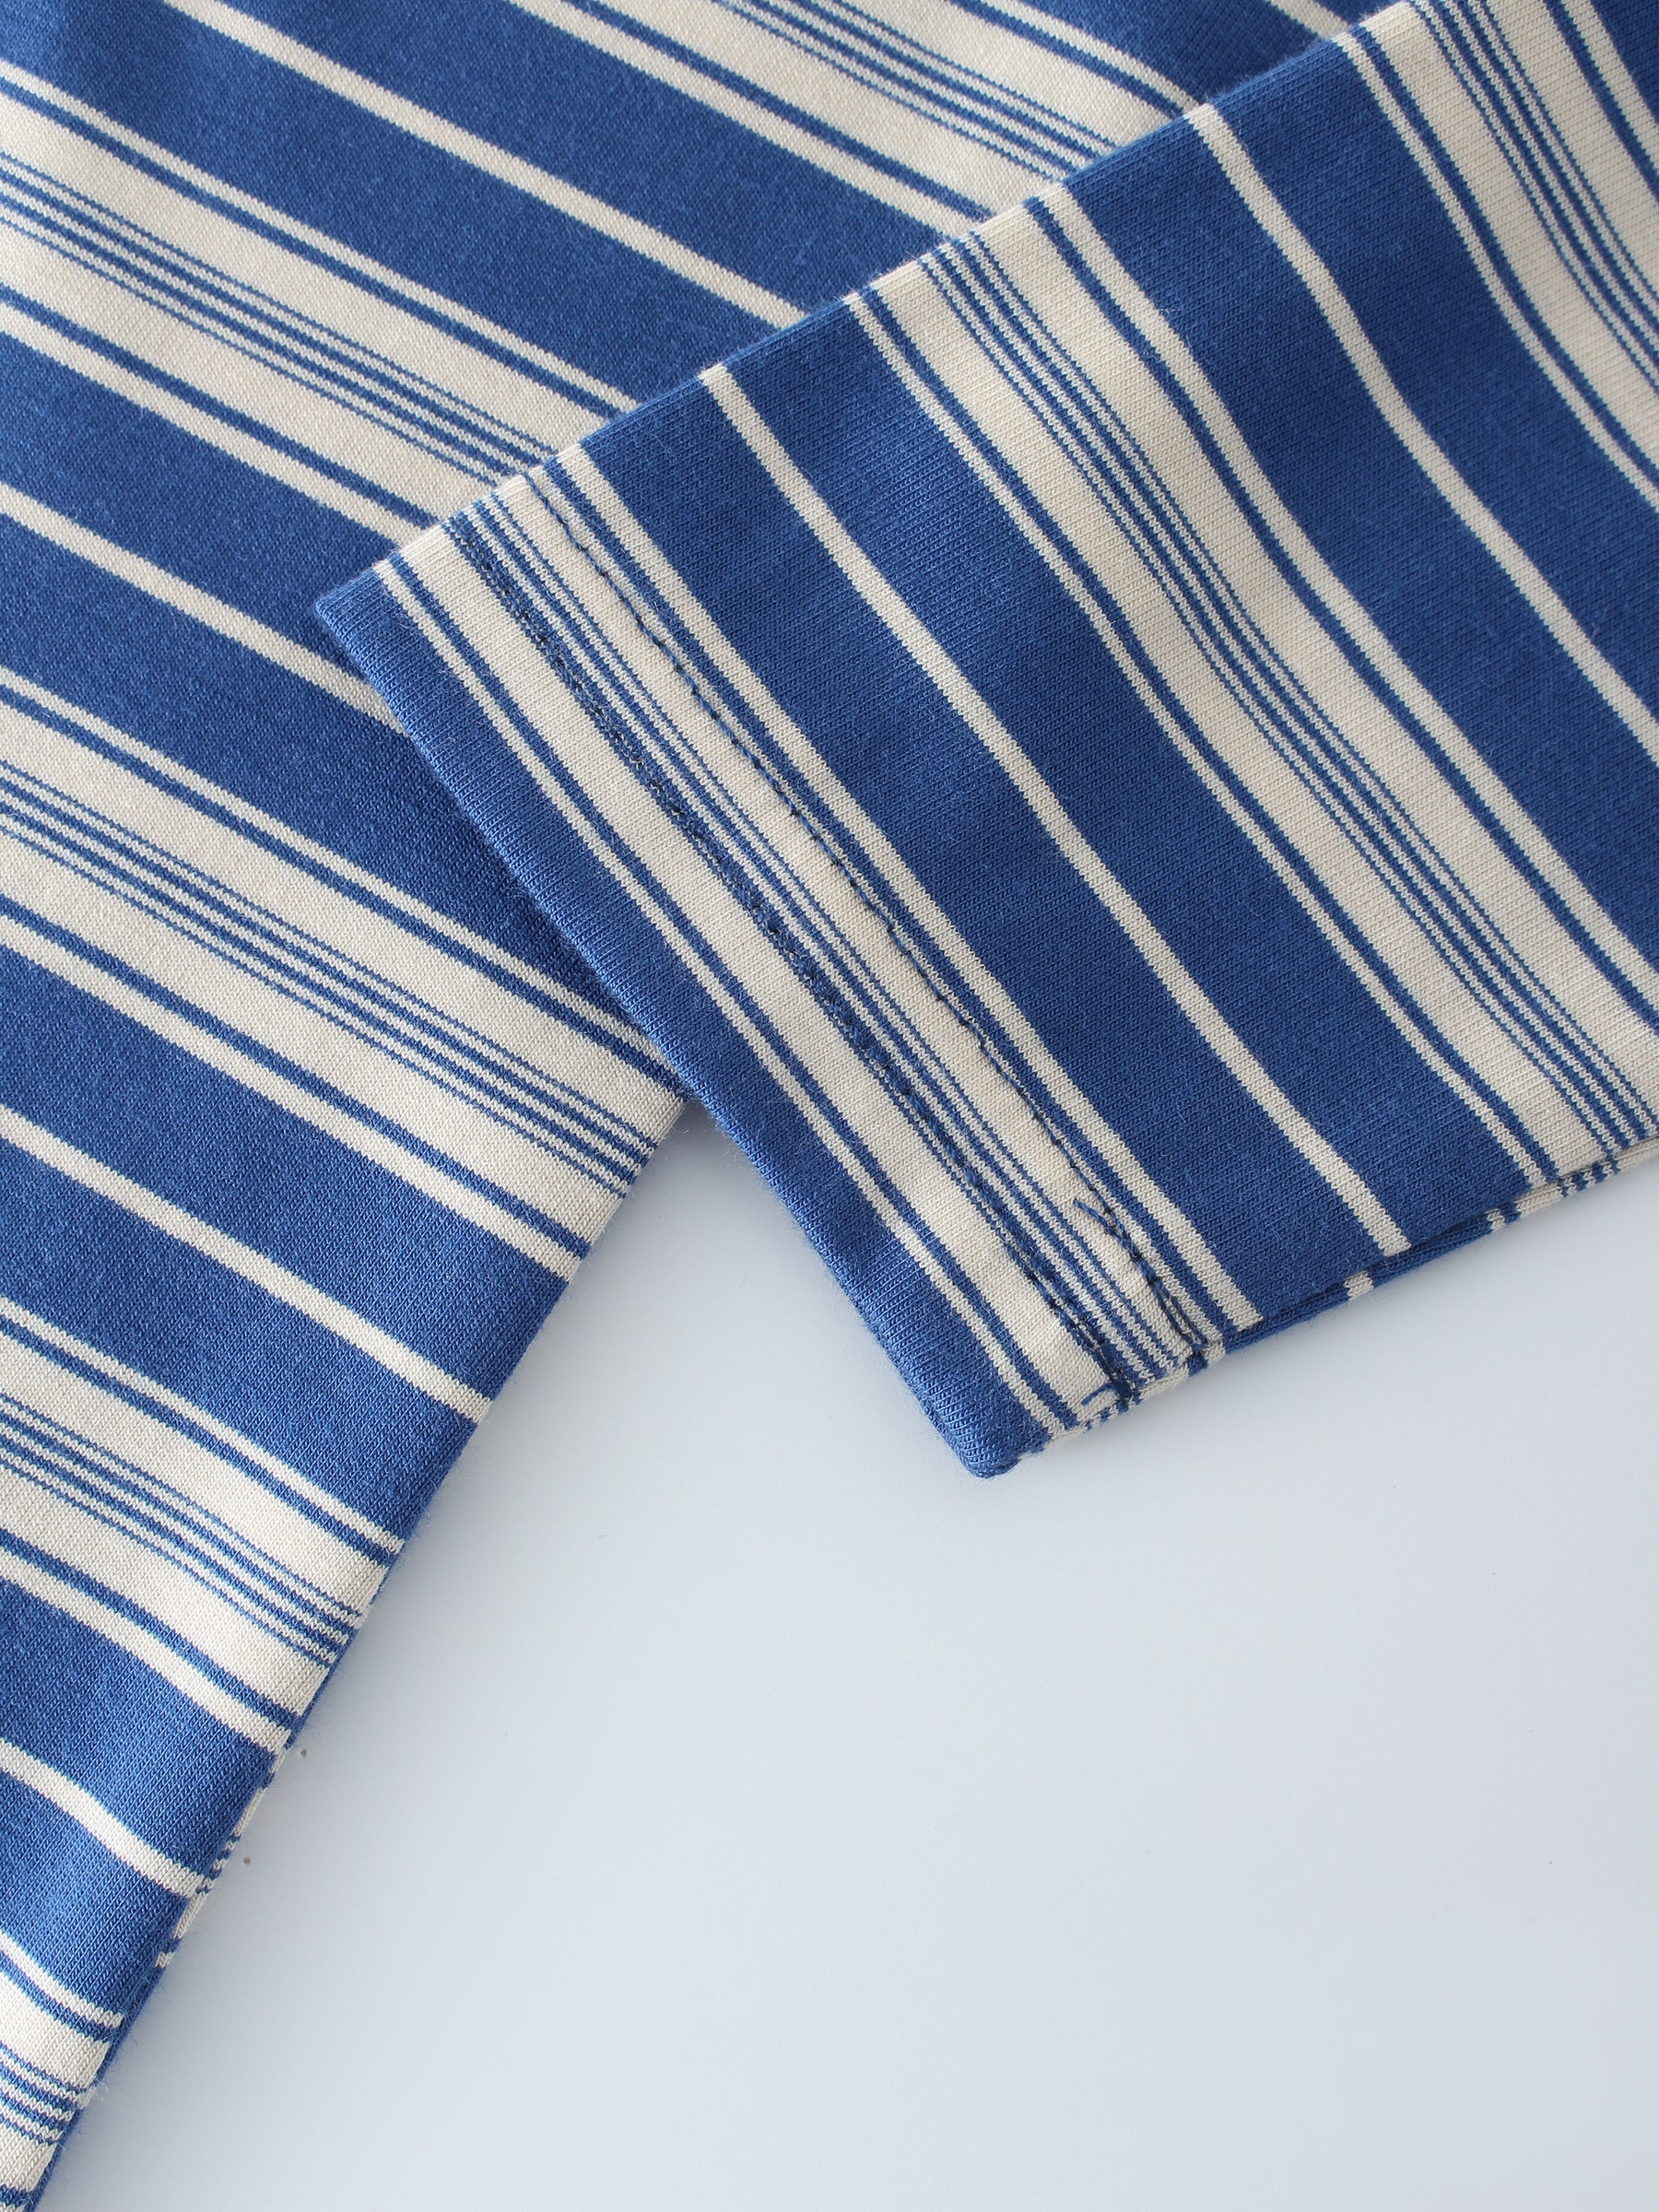 Double Stripe High V-Blue/White